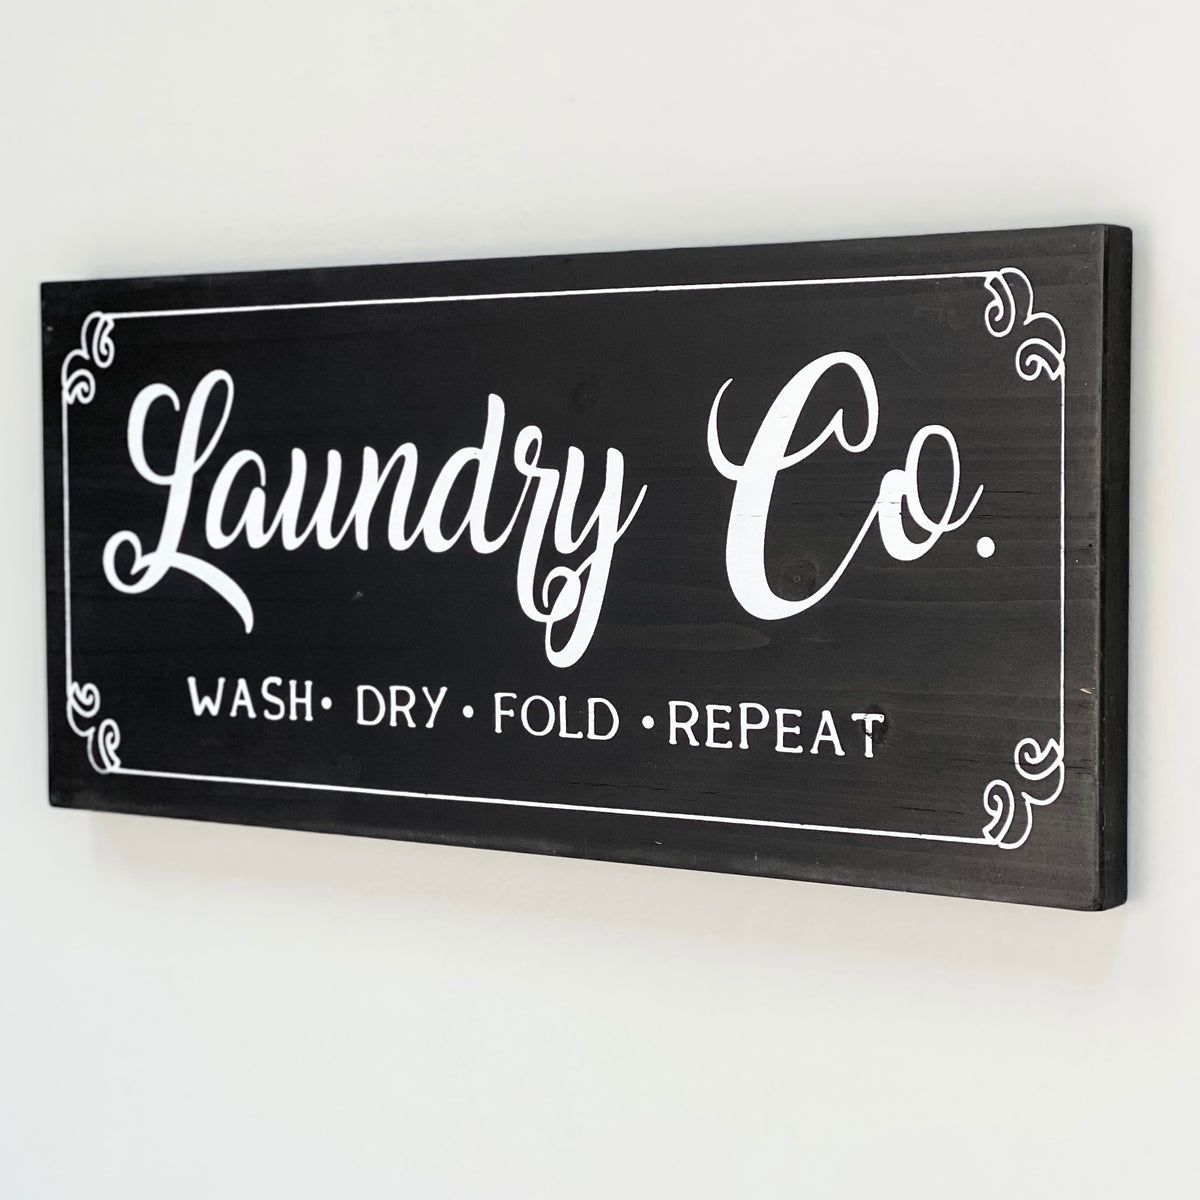 Laundry Co. Wooden Black Wall Art